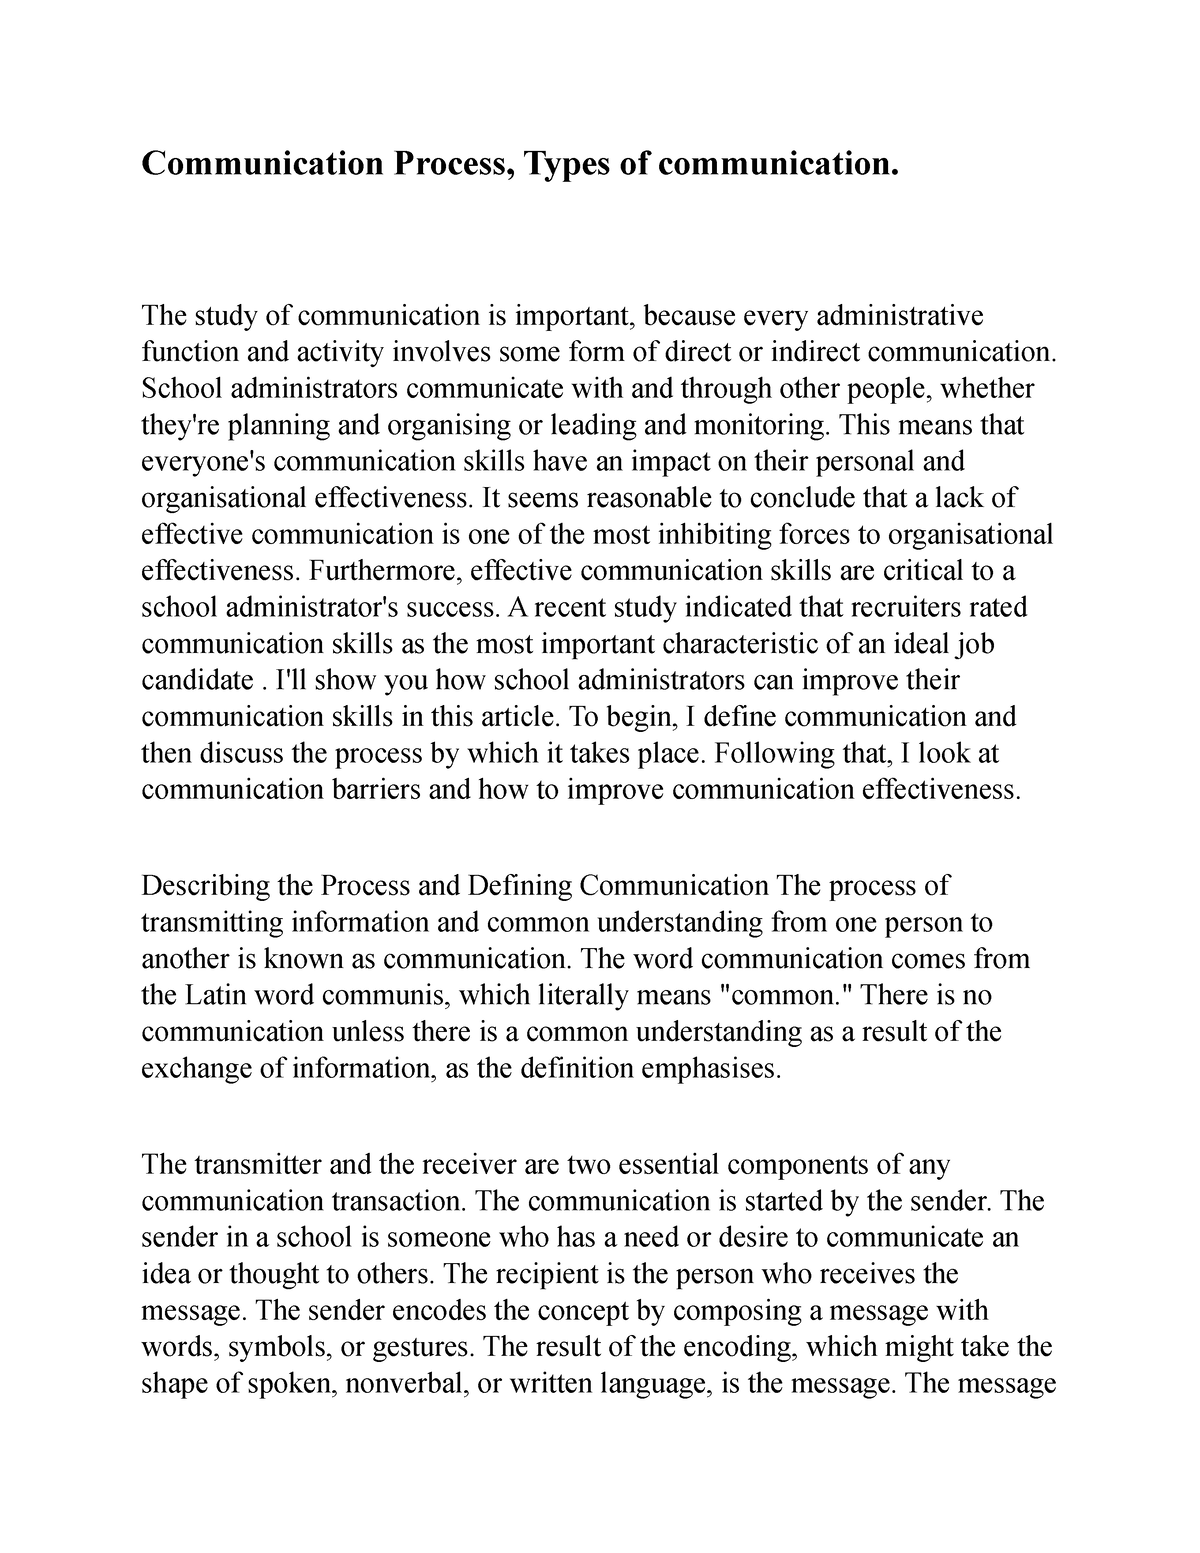 communication thesis pdf